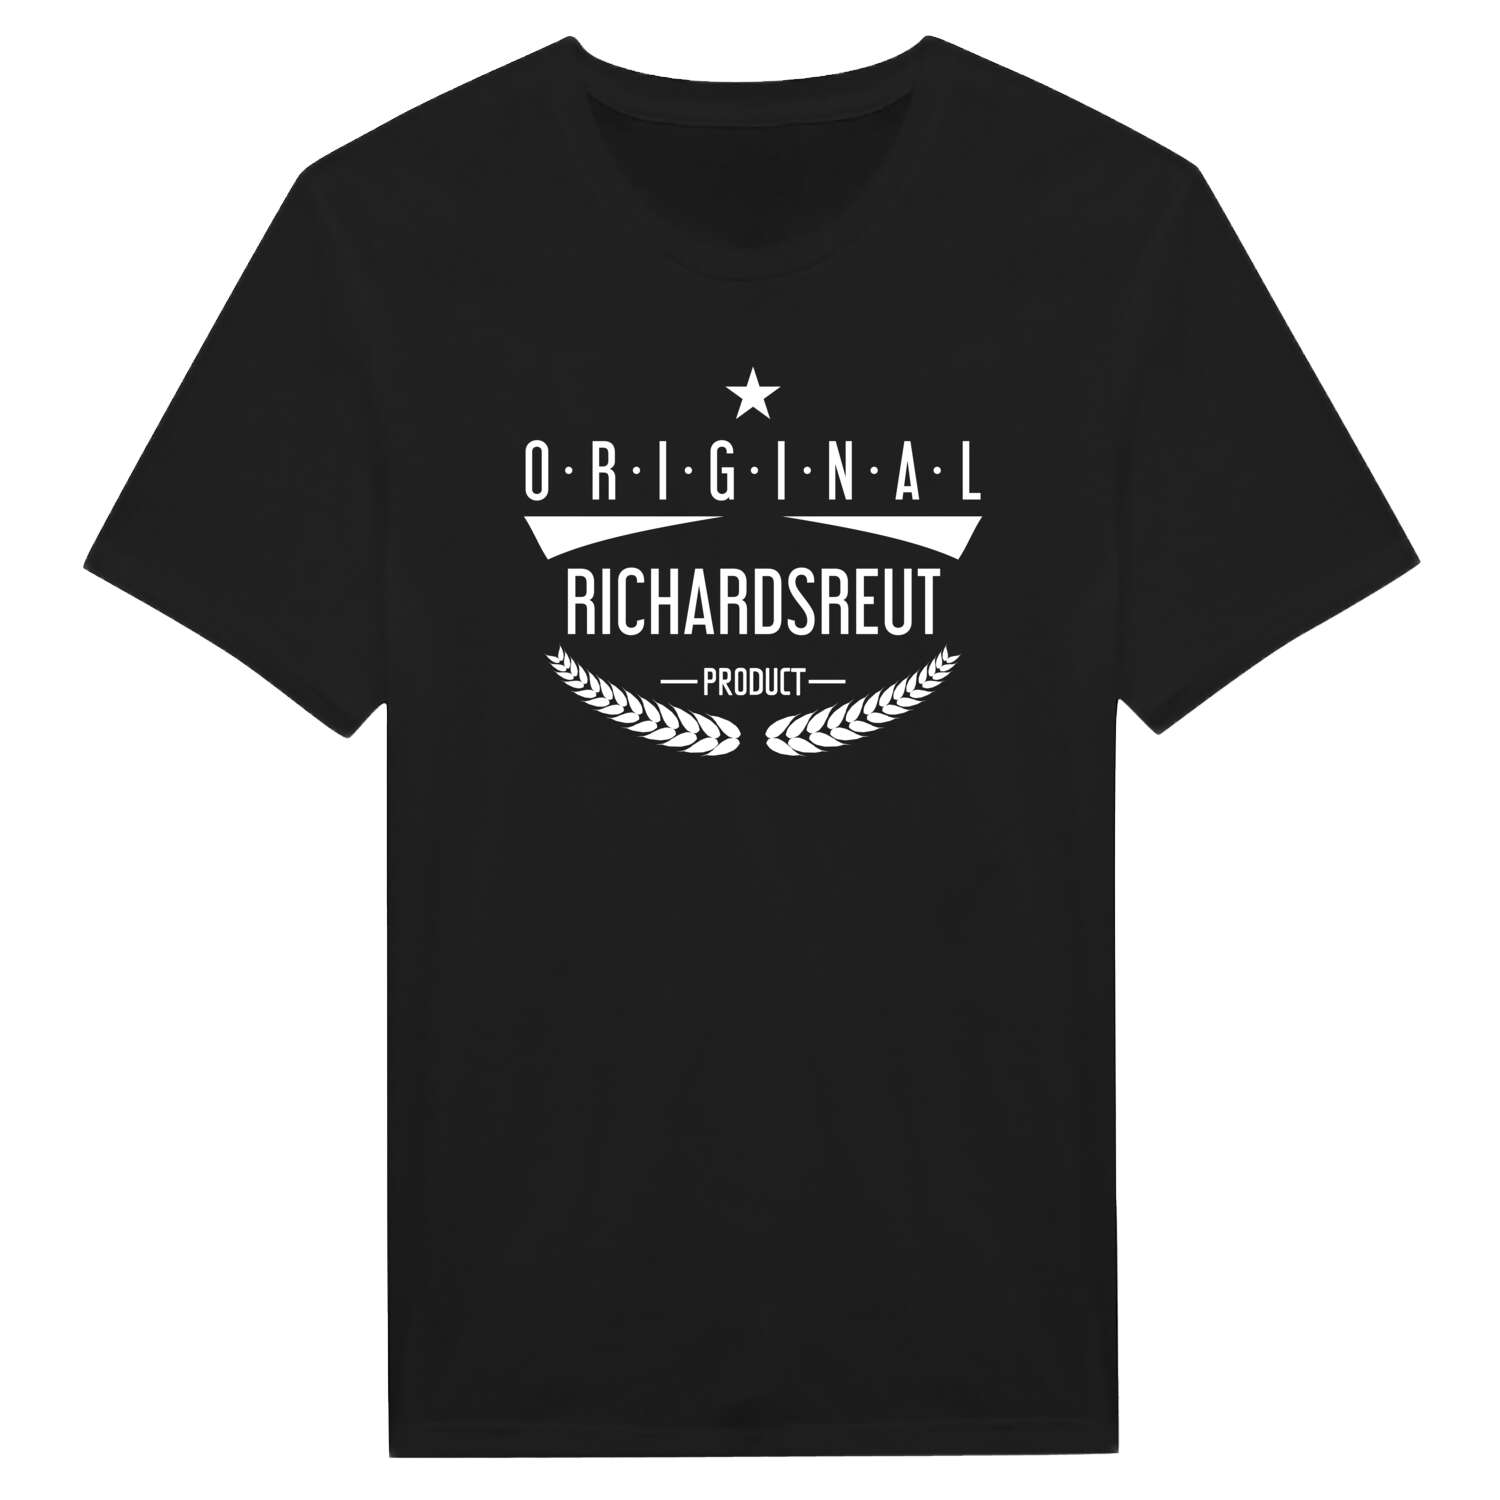 Richardsreut T-Shirt »Original Product«